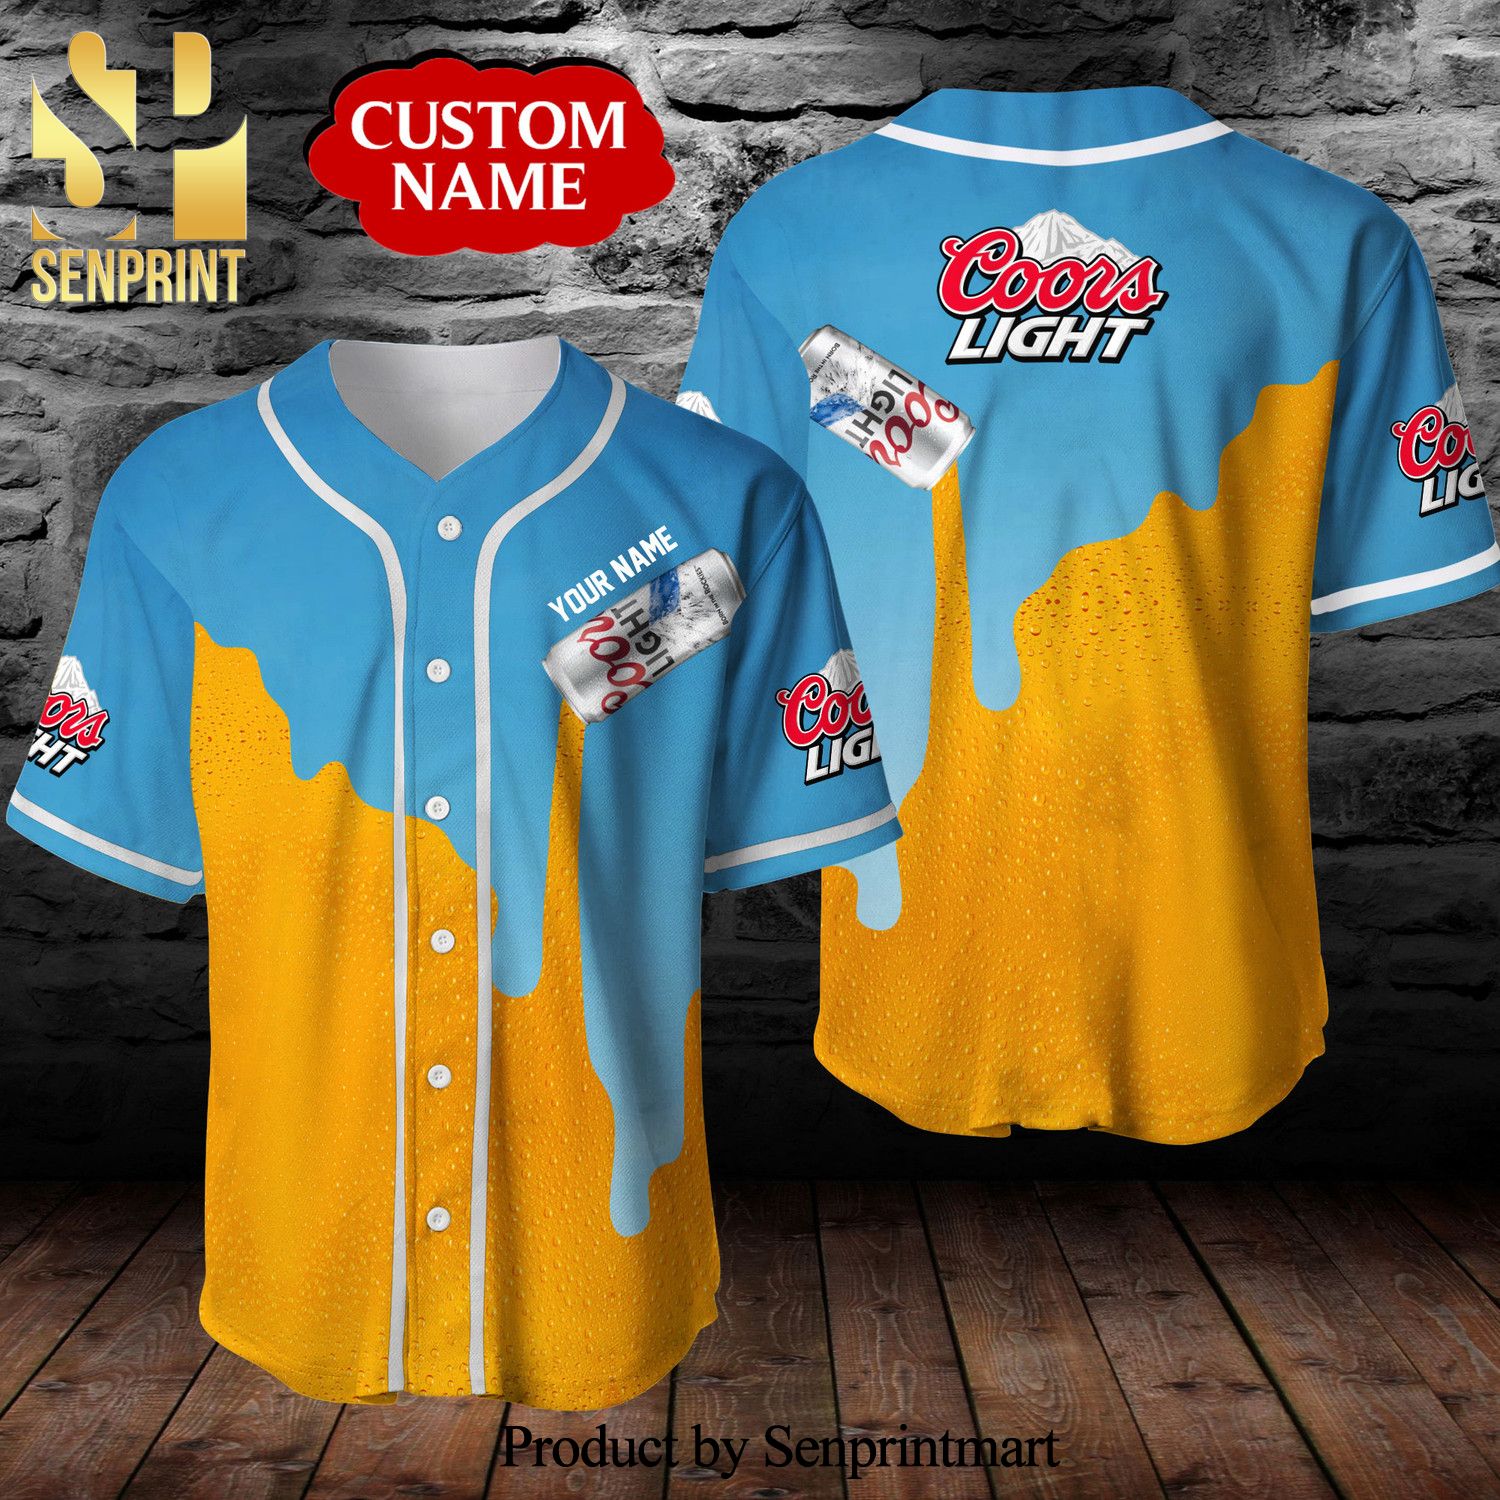 Personalized Coors Light Beer Full Printing Unisex Baseball Jersey Shirt – Blue & Orange